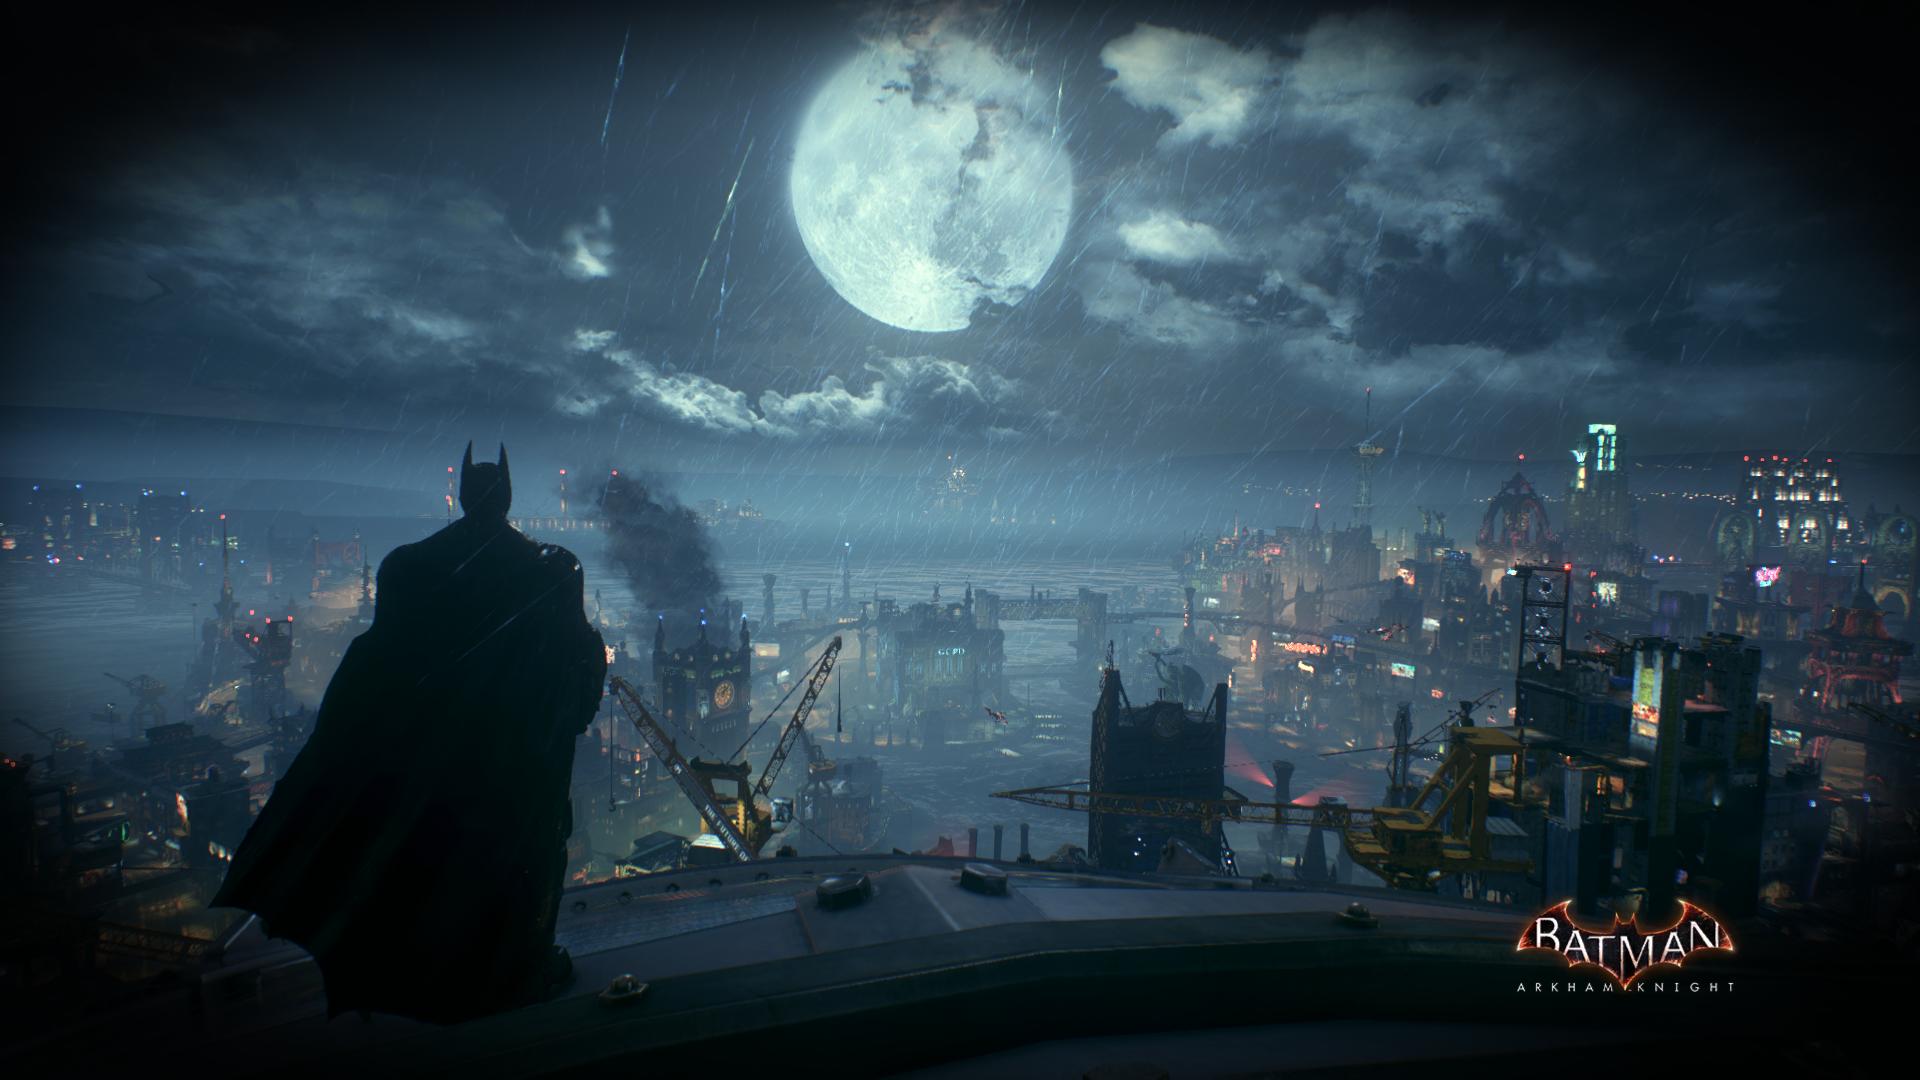 Arkham Knight - Gotham Panorama by DonDiego512 on DeviantArt